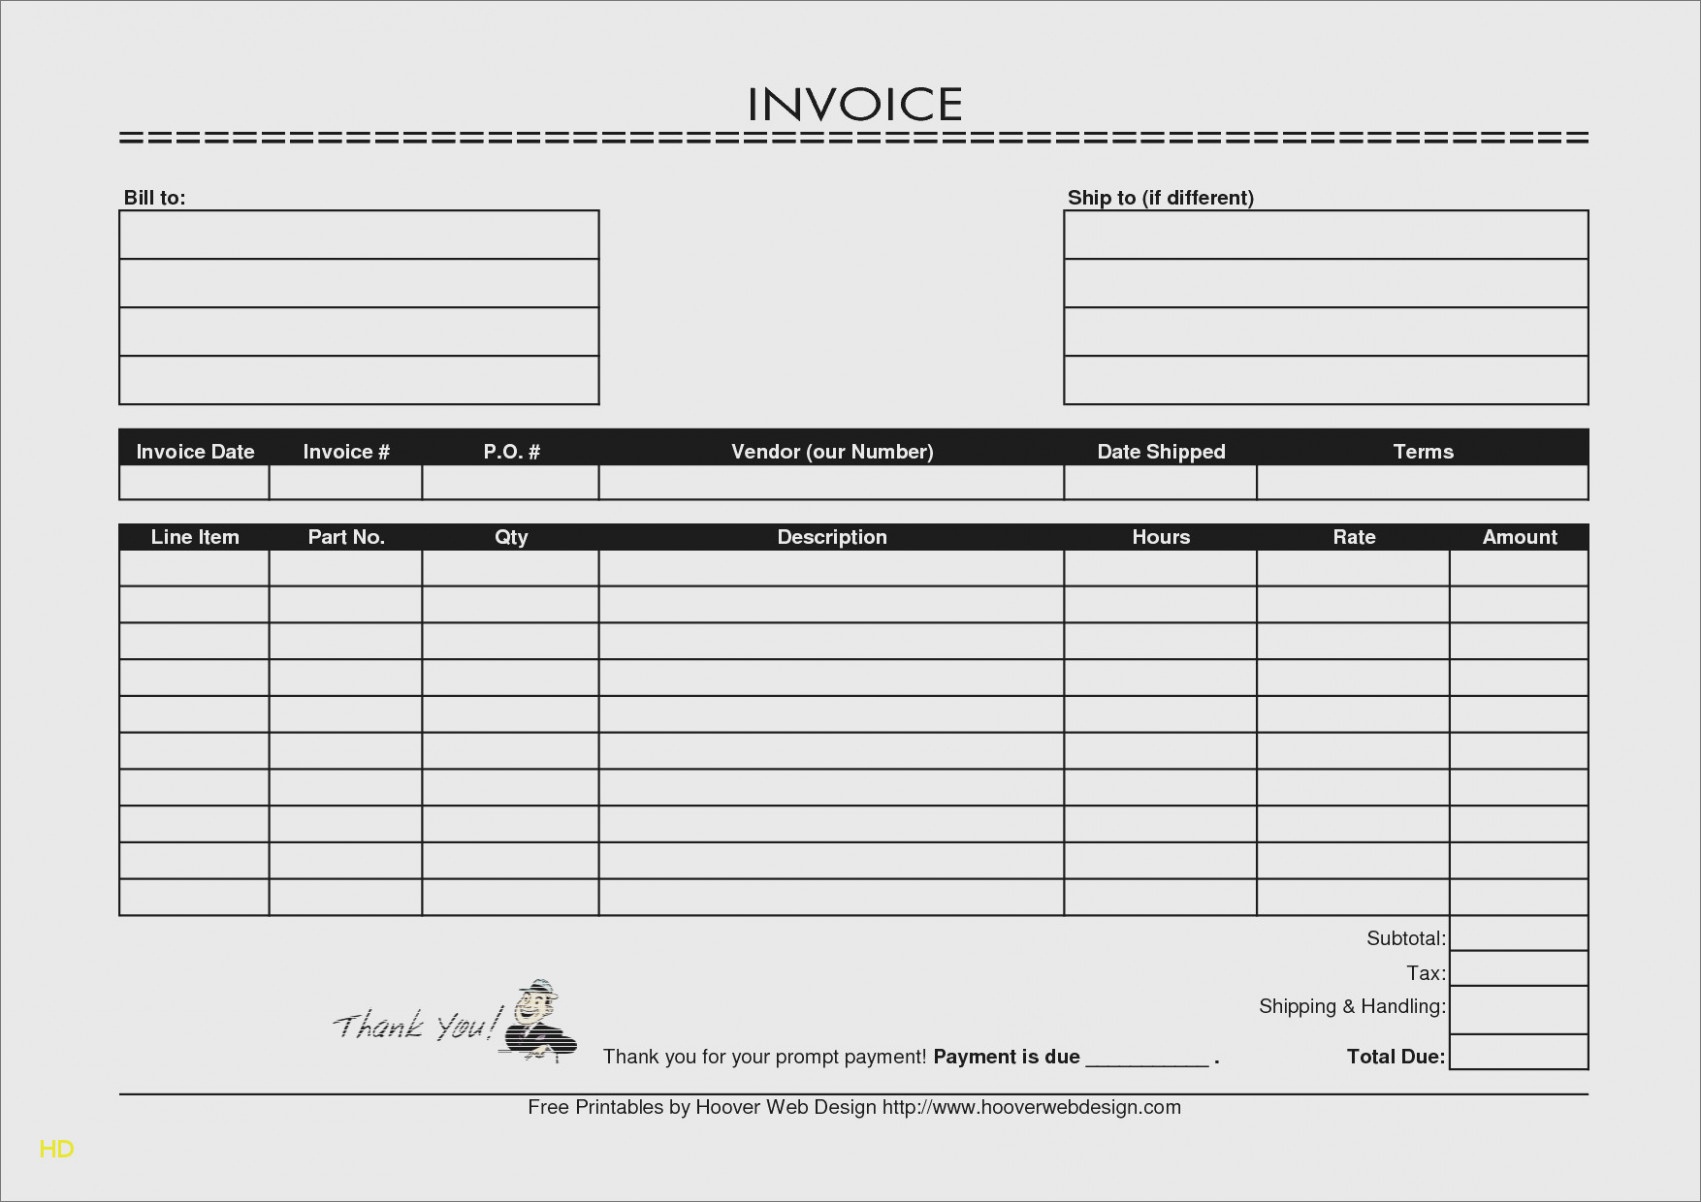 Reasons Why Free Printable | Realty Executives Mi : Invoice And - Free Printable Blank Invoice Sheet